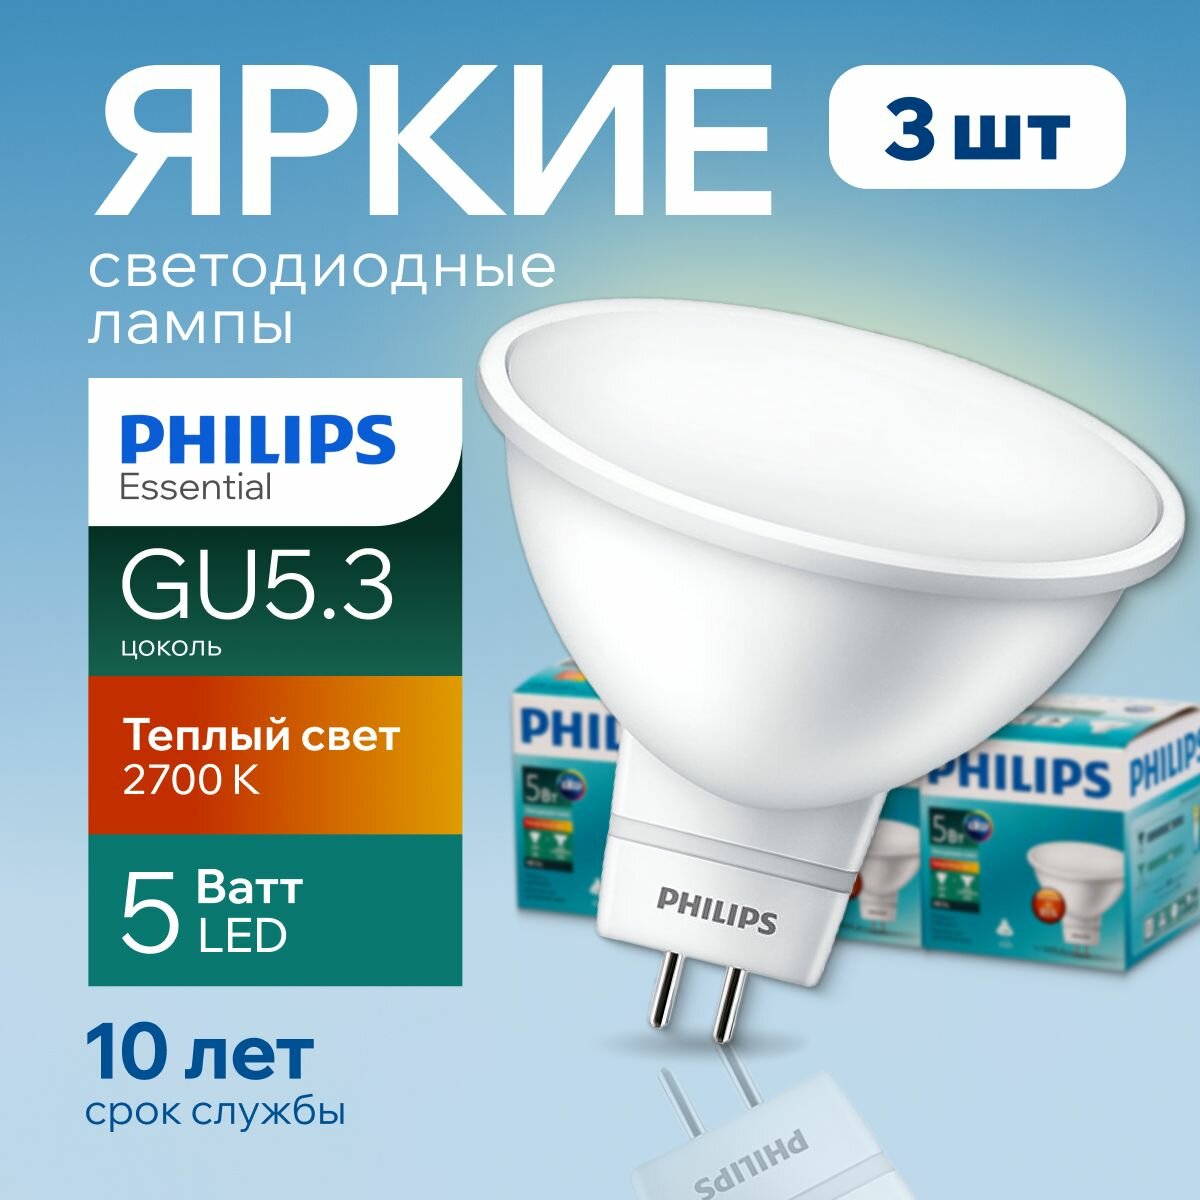 Светодиодная лампочка Philips GU5.3 5 Ватт теплый свет, MR16 спот 2700К 240V Essential LED 827, 5W, 400лм, набор 3шт